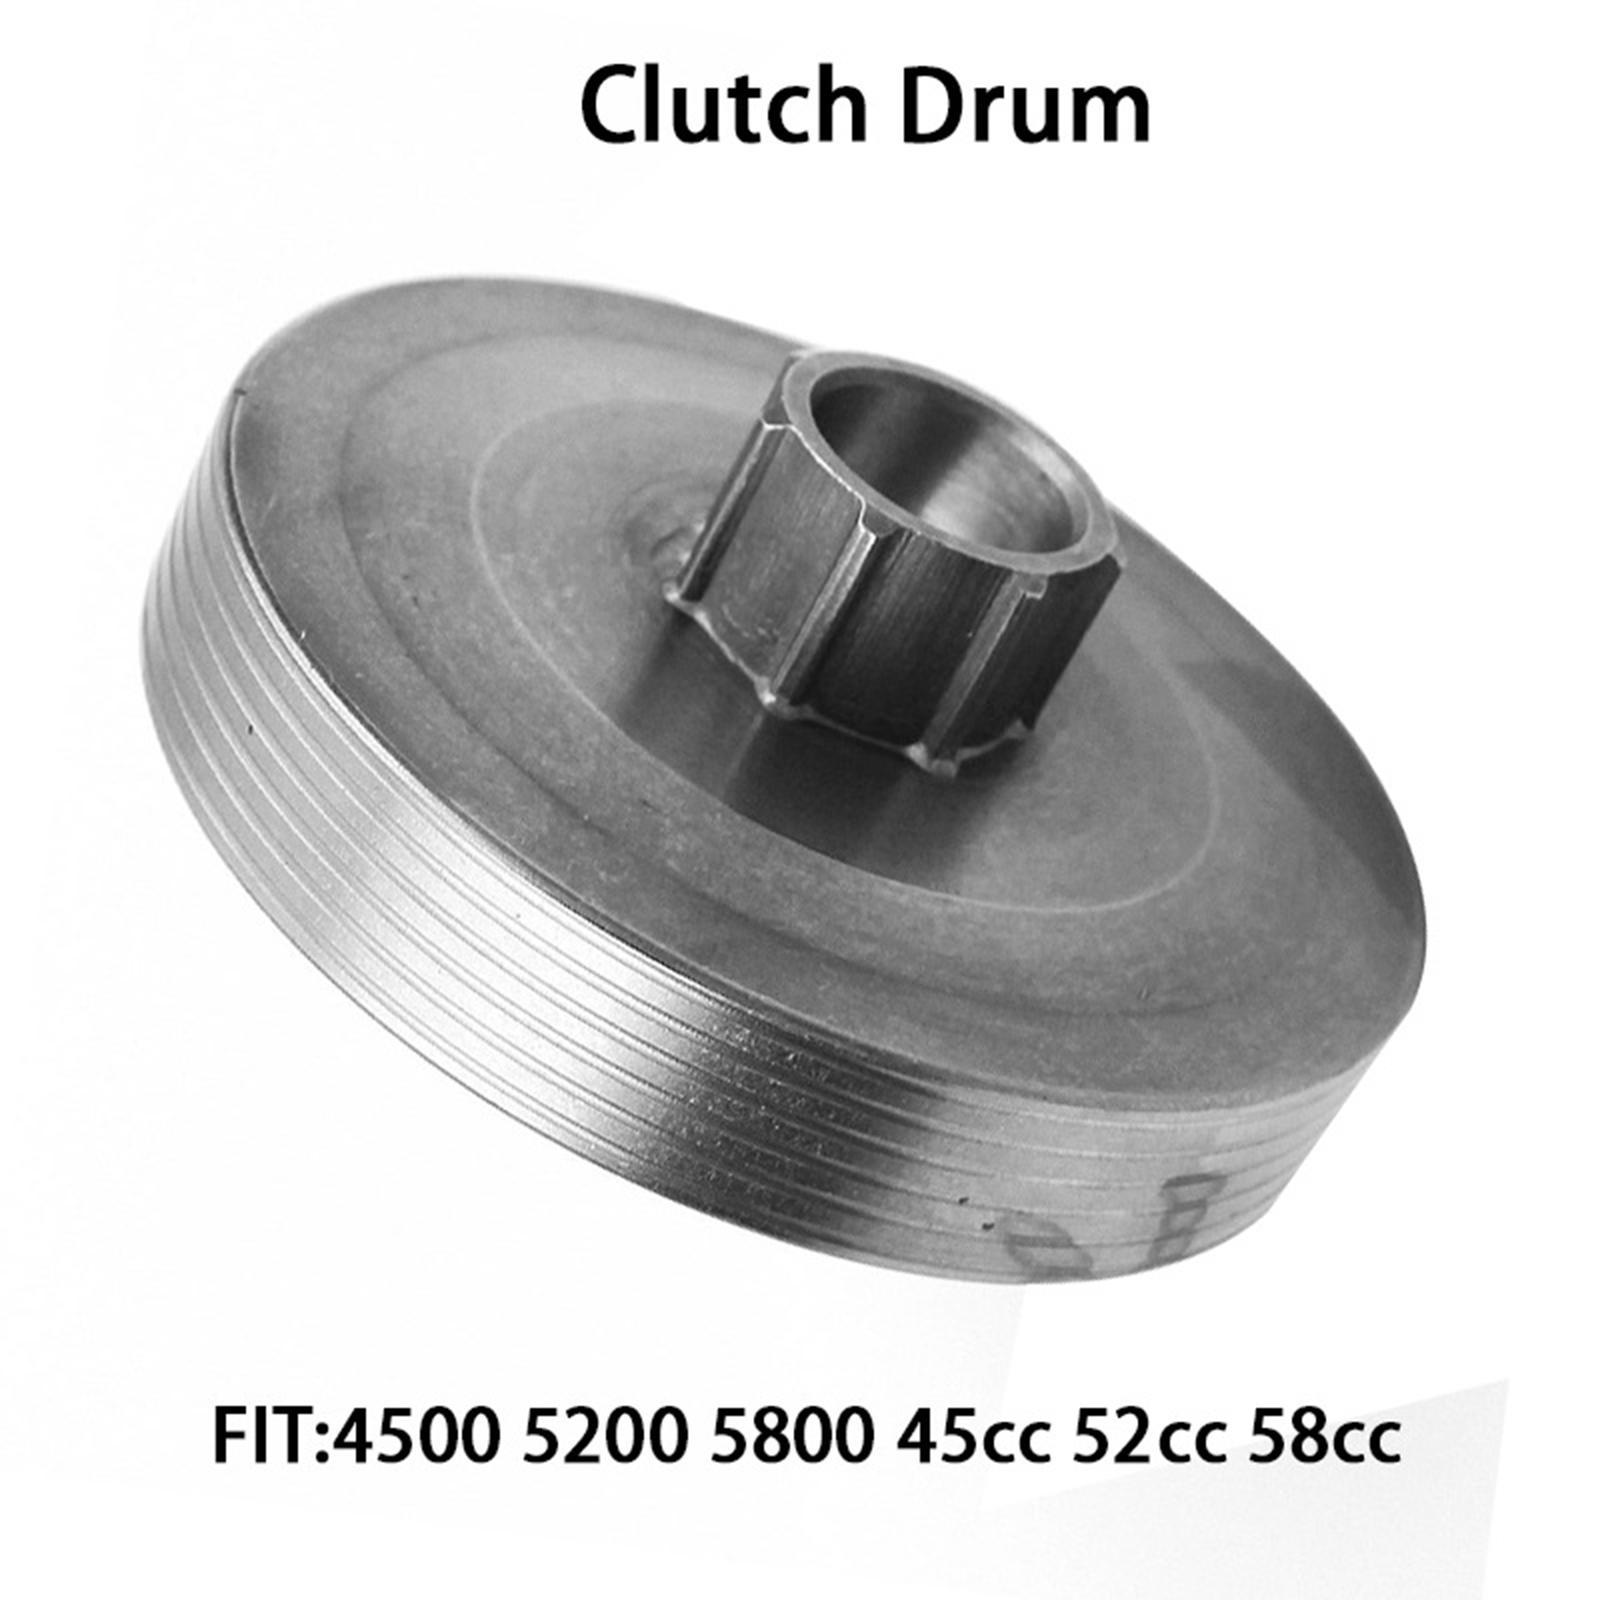 Clutch Drum Sprocket Kit Clutch Roller Worm Gear for 4500 58cc Accessories